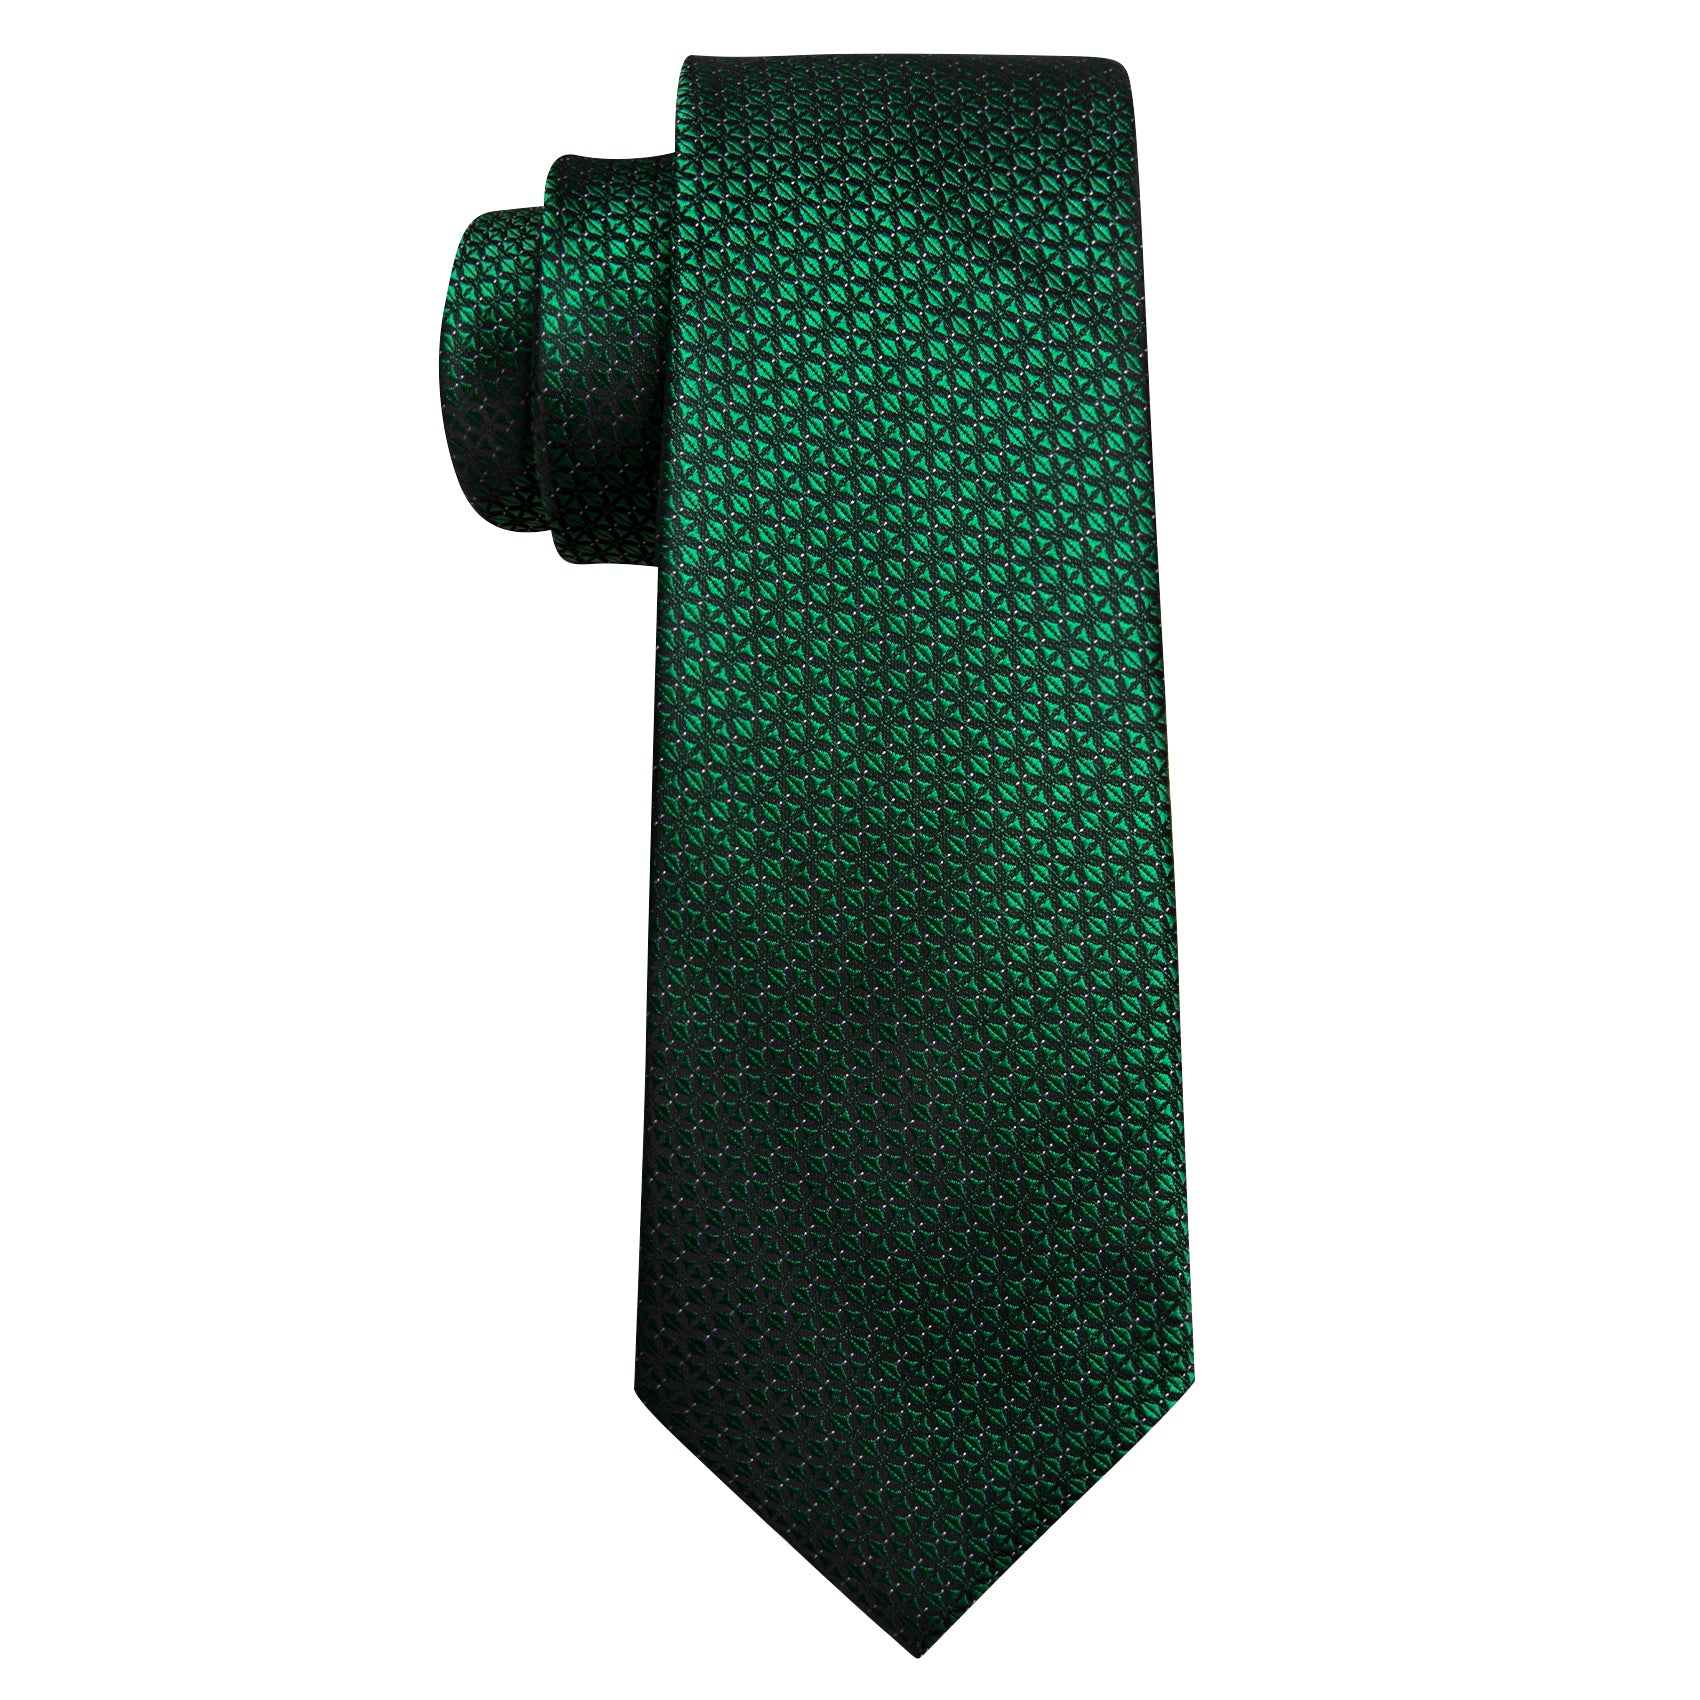  Novetly Green Plaid Silk Tie Handkerchief Cufflinks Set